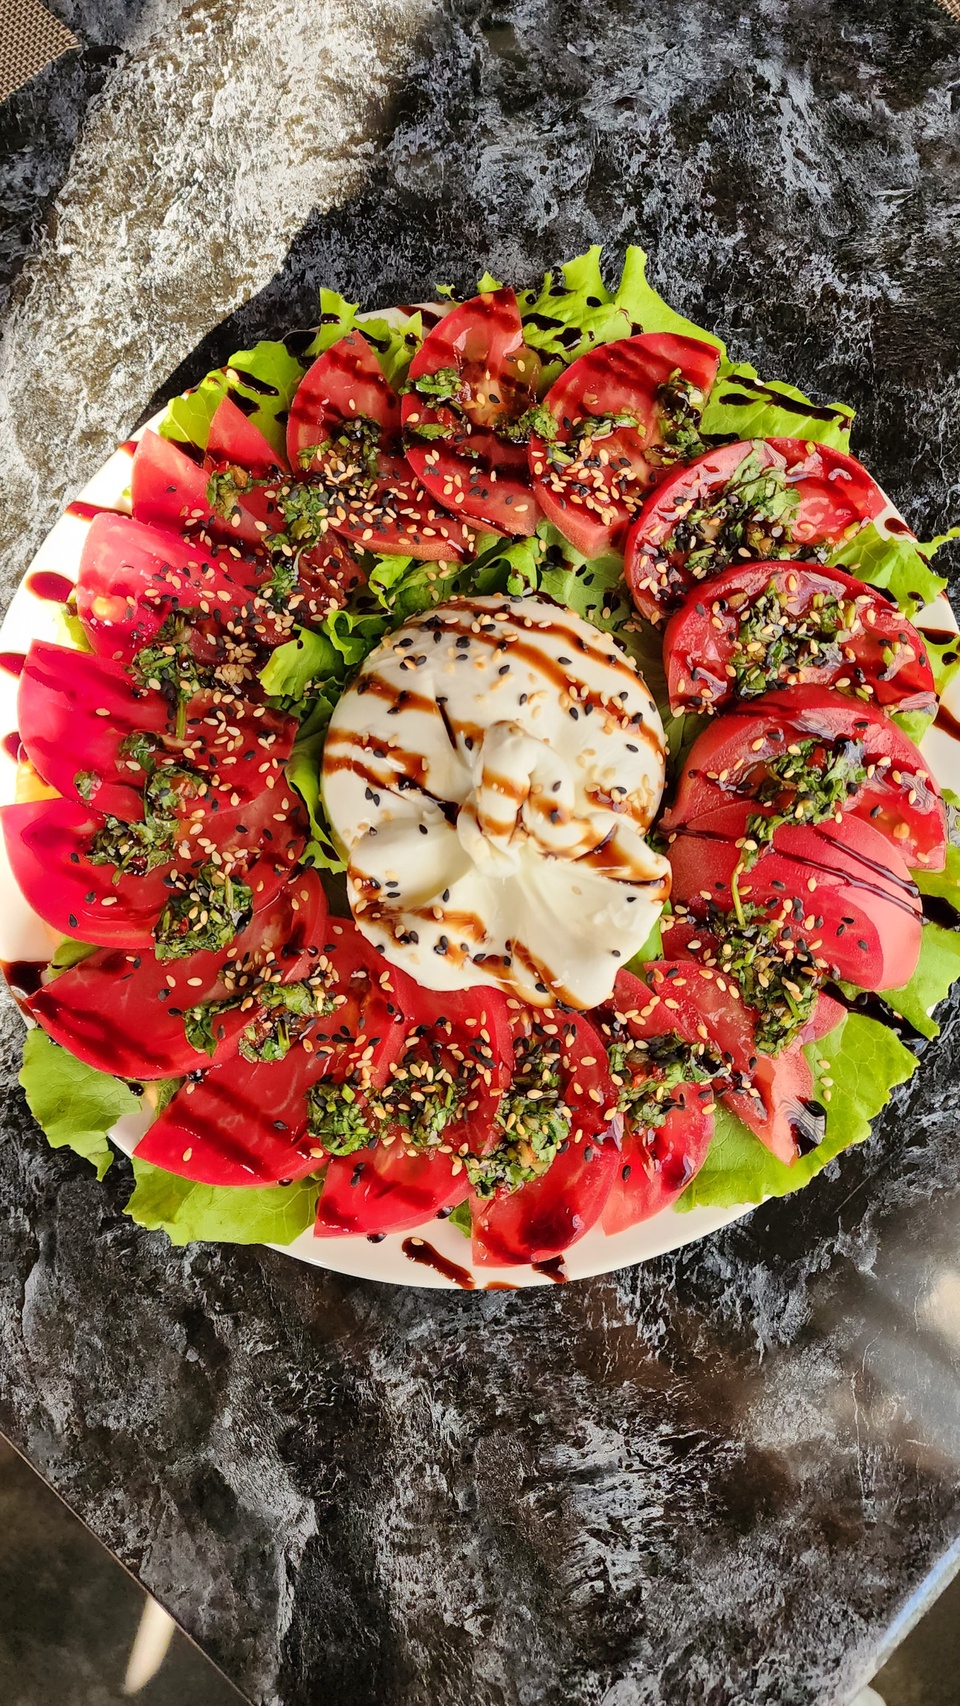 Салат Буратта с томатами на лепёшке 450гр - 750 ₽, заказать онлайн.